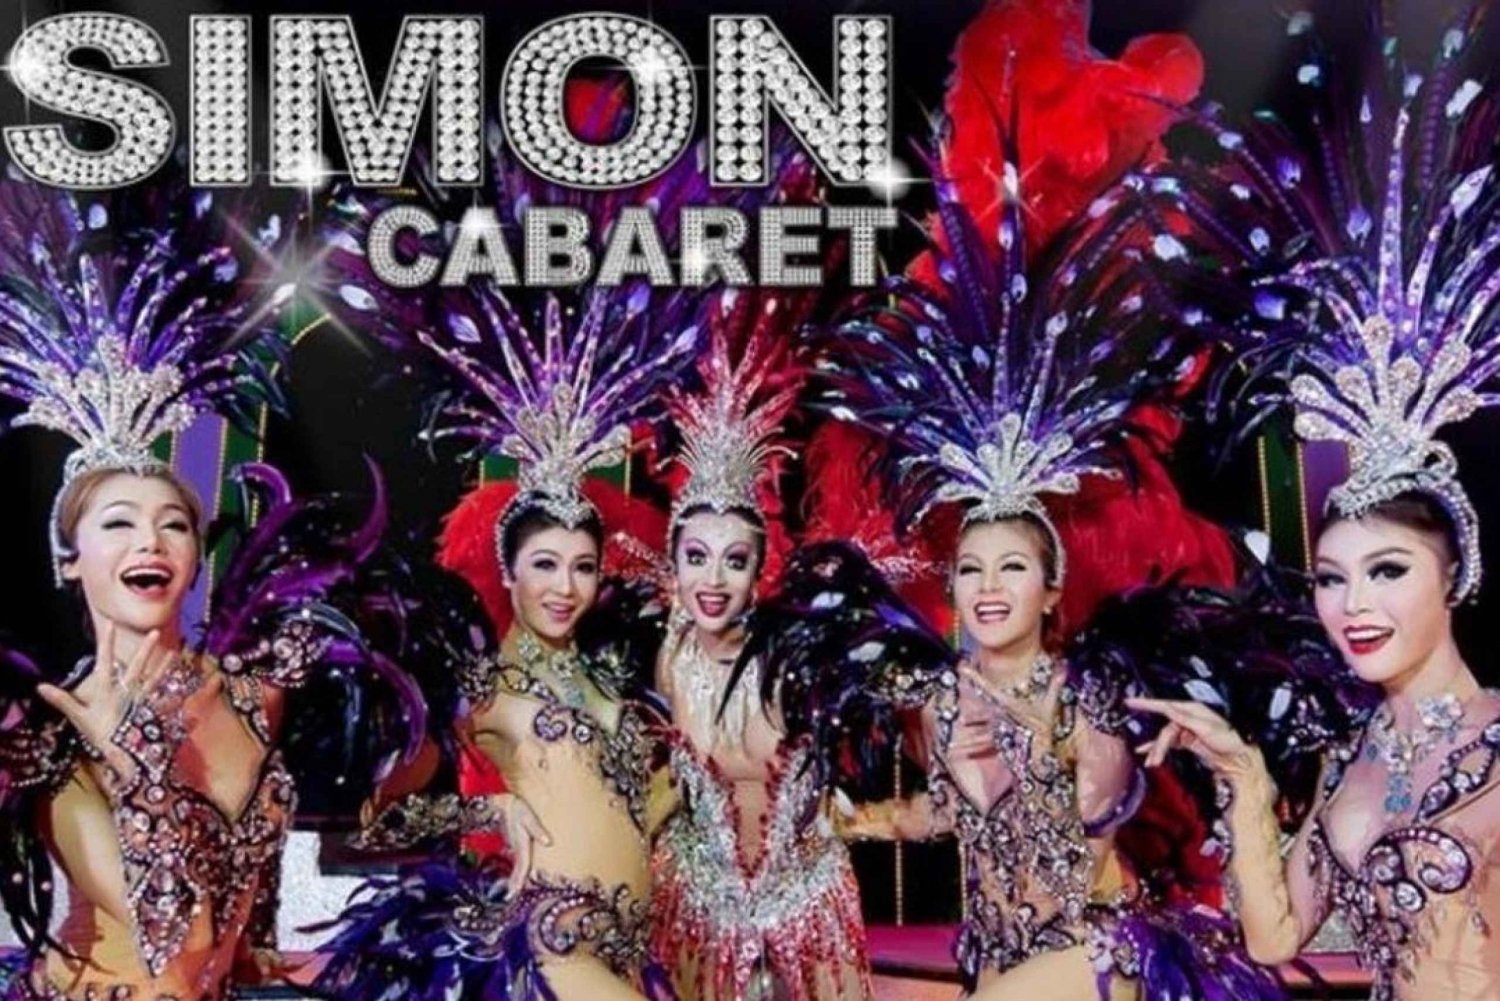 Phuket: Simon Cabaret Show Inträdesbiljett med transport